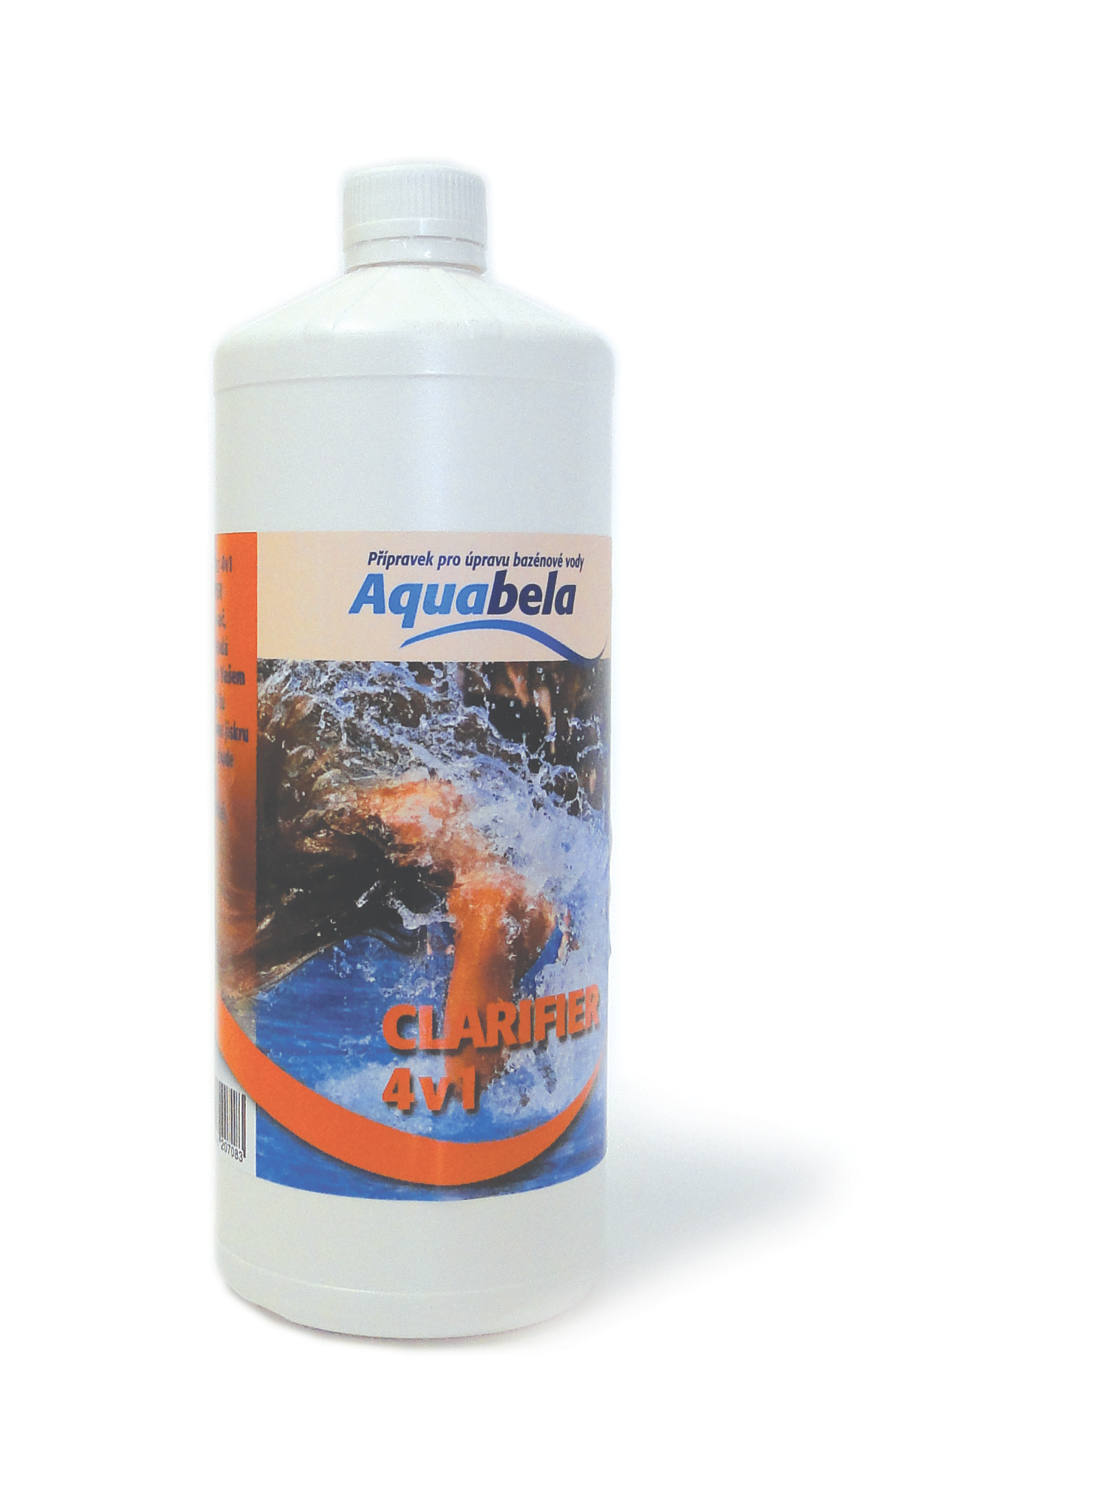 Aquabela Clarifier 4v1 - lahev 0,5l